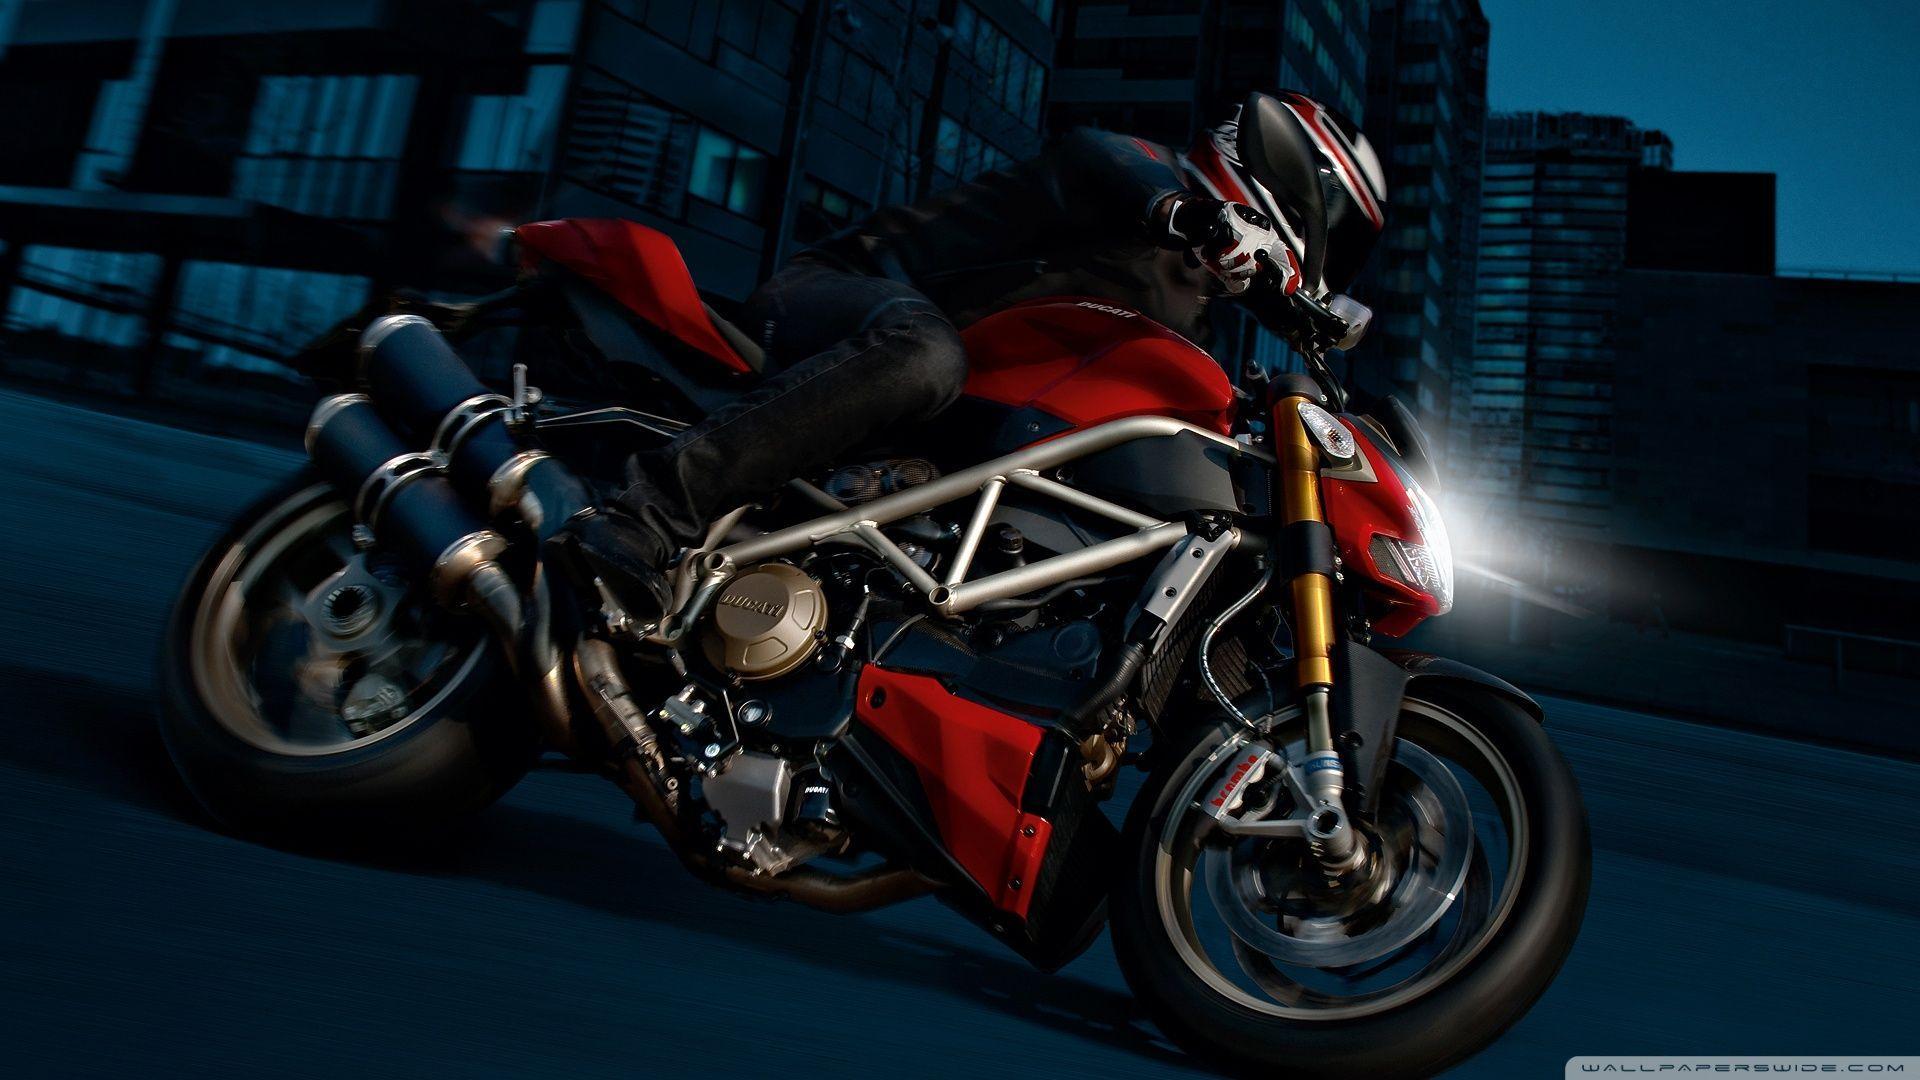 Ducati Bike HD desktop wallpaper, Widescreen, High Definition